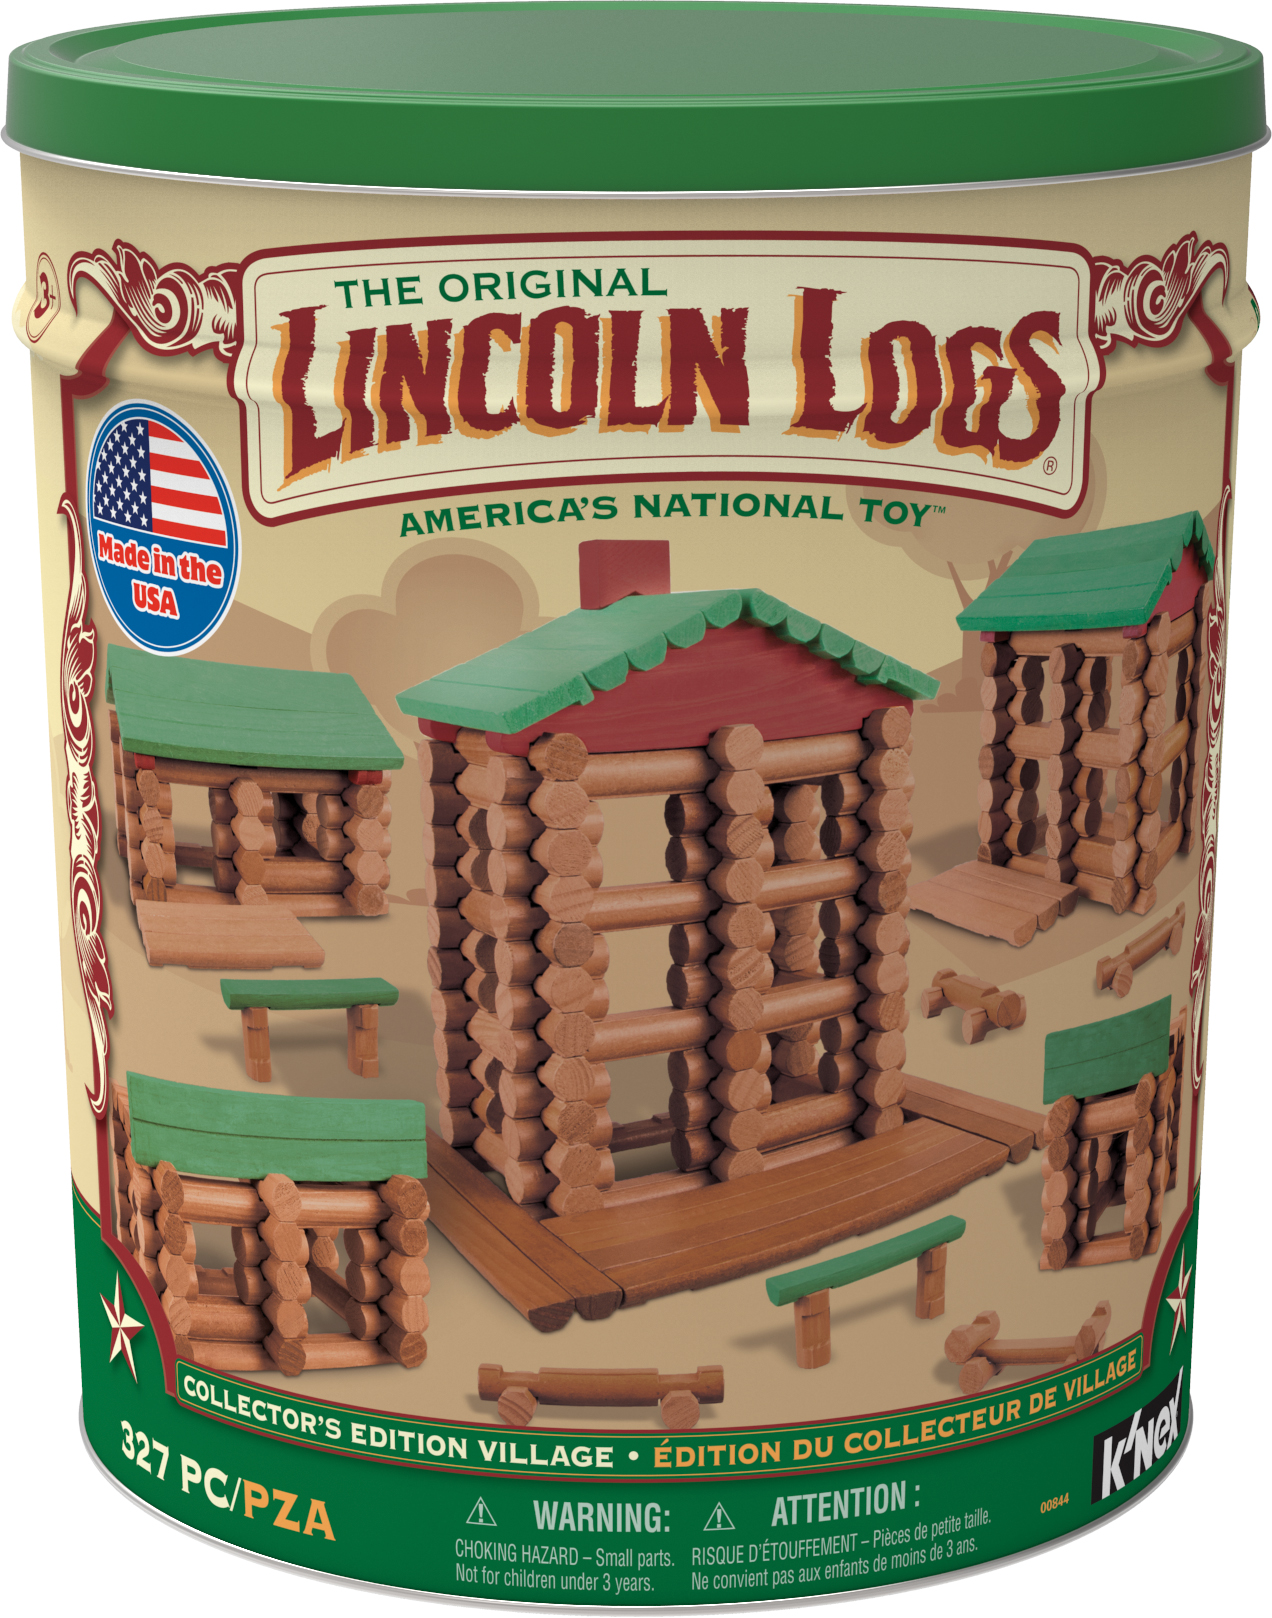 00844-Lincoln-Logs-Collectors-Edition-Village-Pkg_300dpi